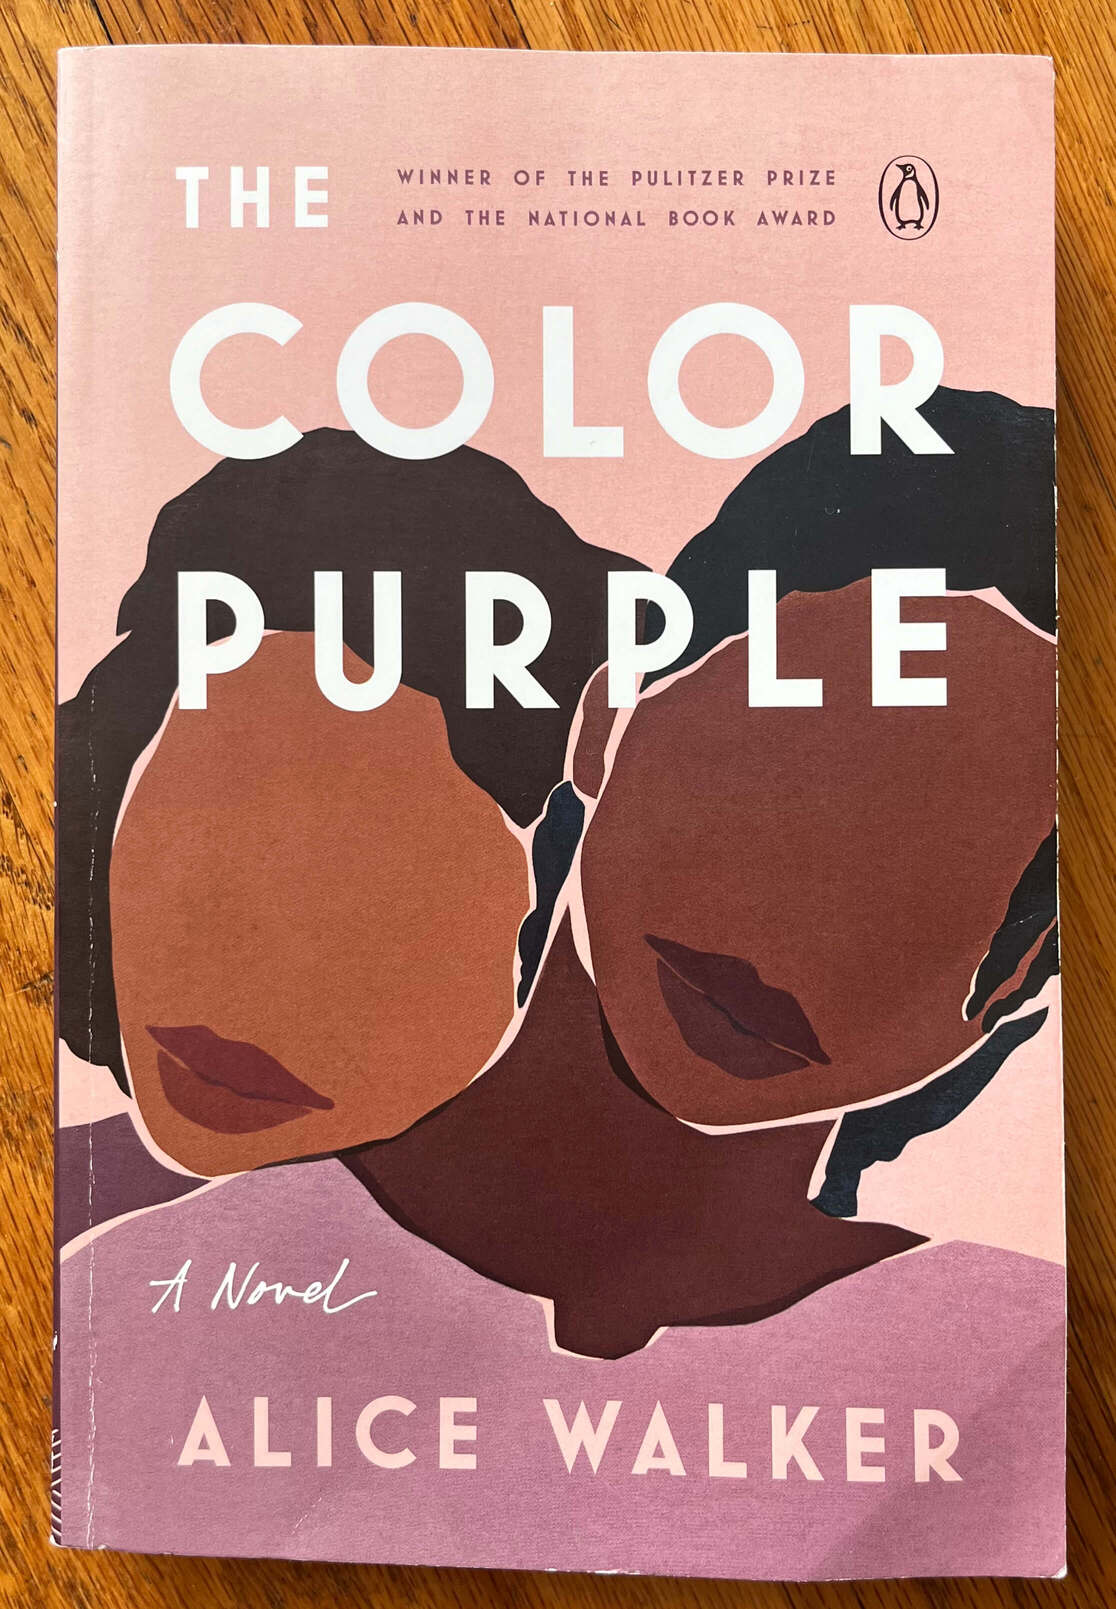 “The Color Purple: A Novel” by Alice Walker.